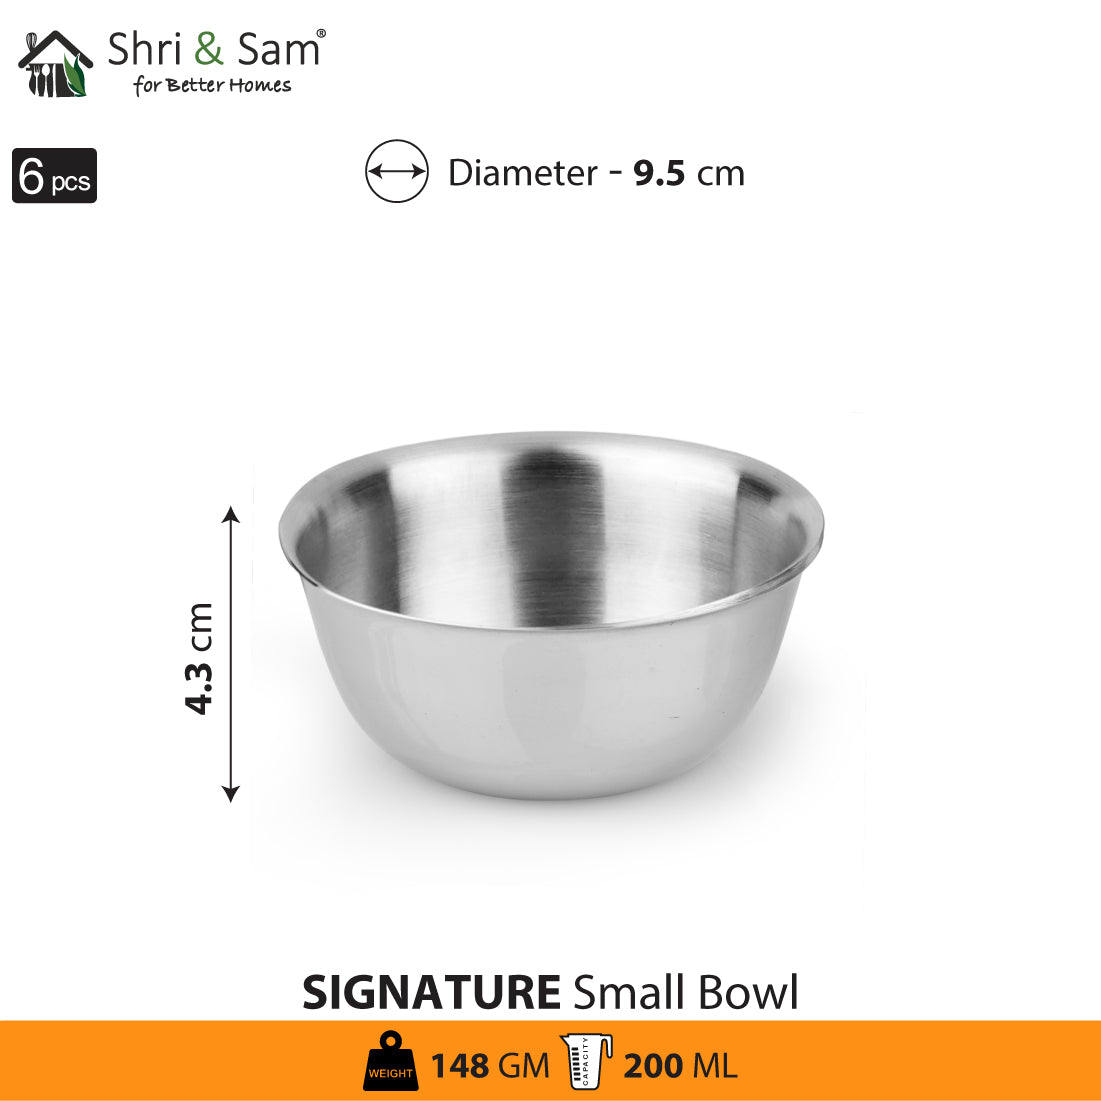 Stainless Steel 6 PCS Small Bowl Signature - Matt